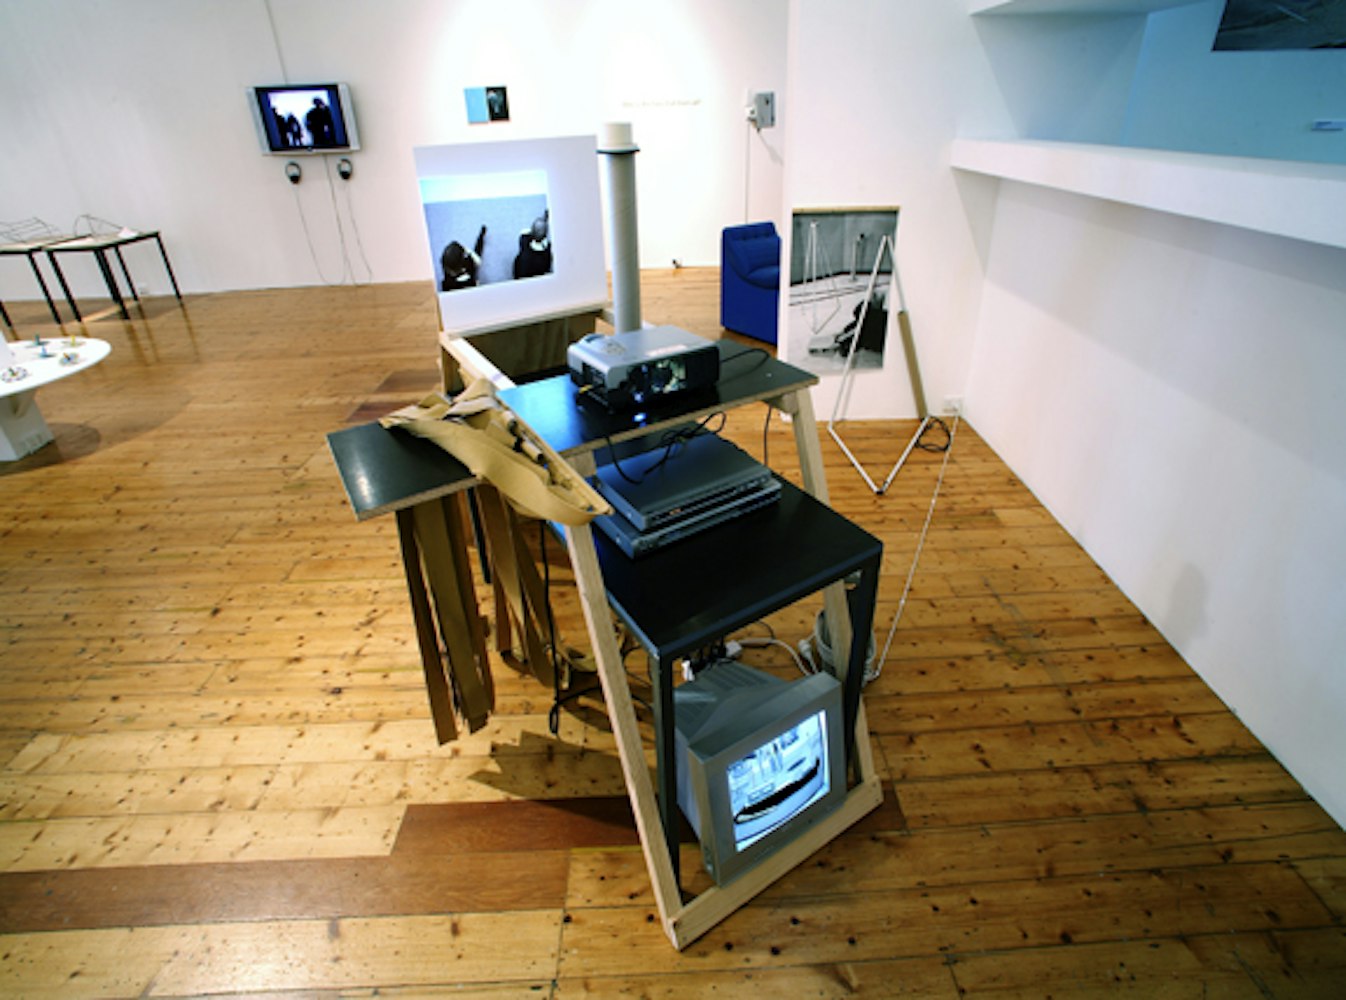 Installation view of 'Gertrude Studios 2007' at 200 Gertrude Street 